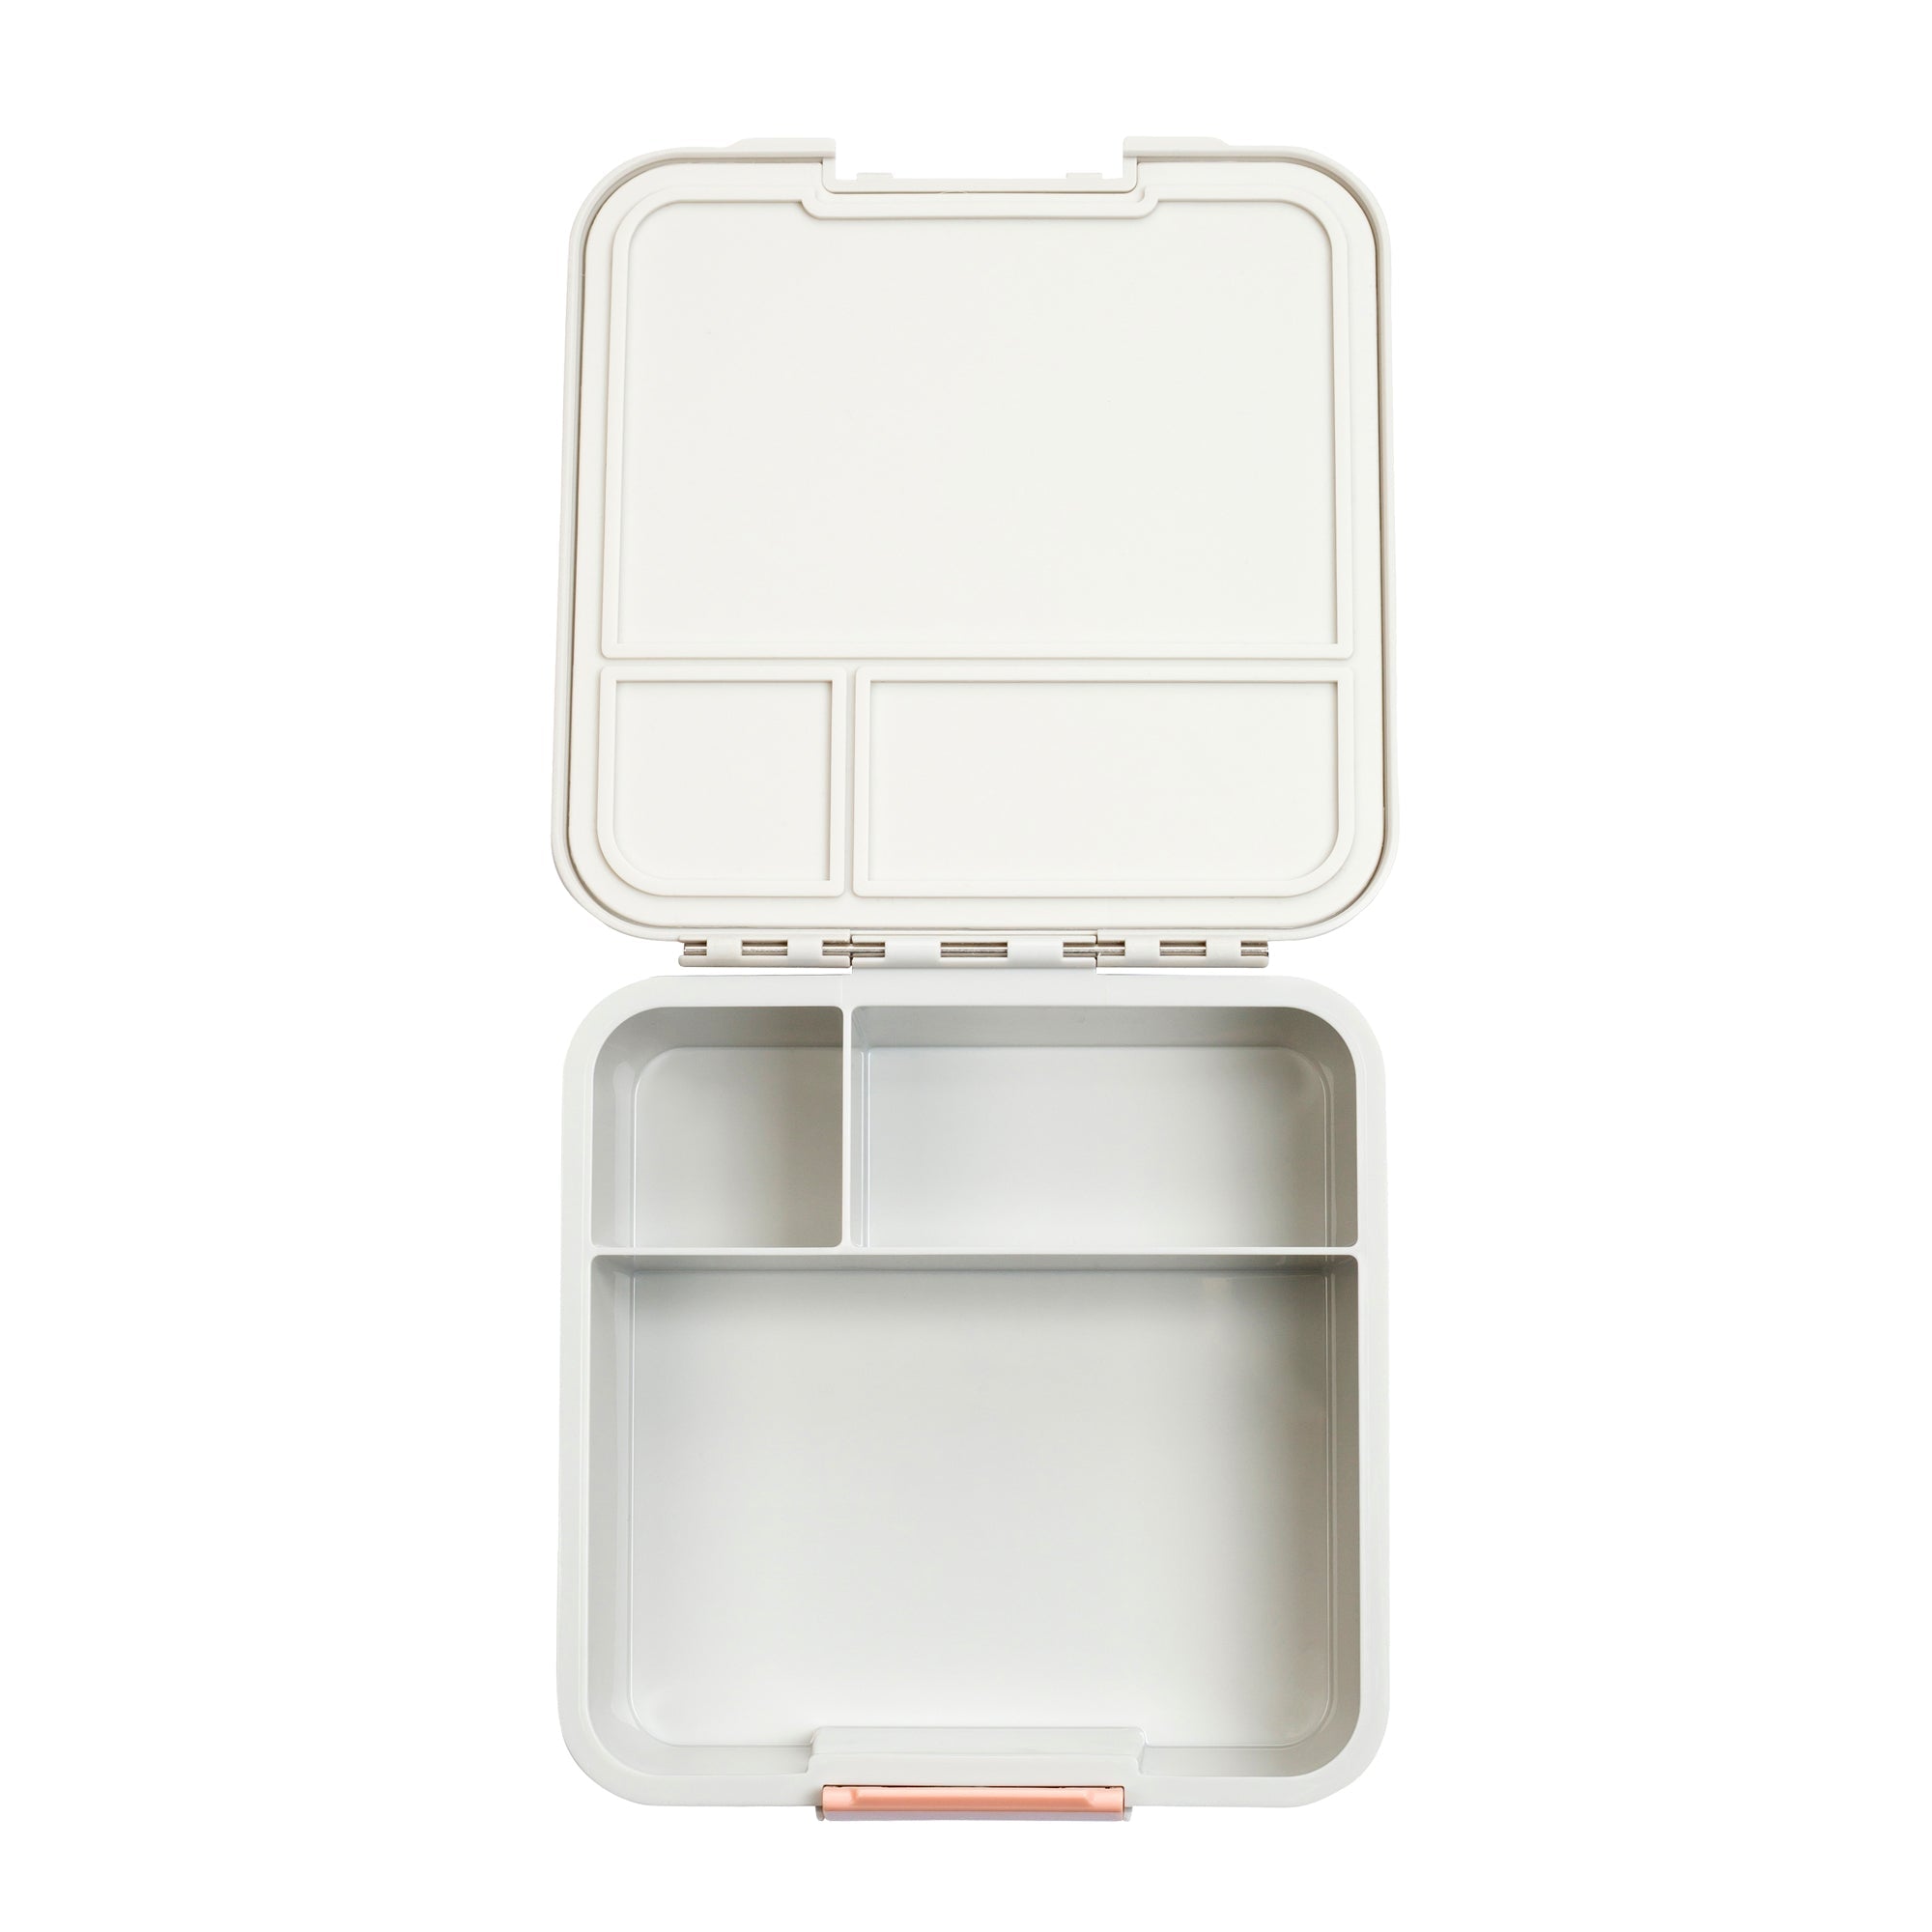 Bento Three - Little Lunch Box Co - Jednorožec